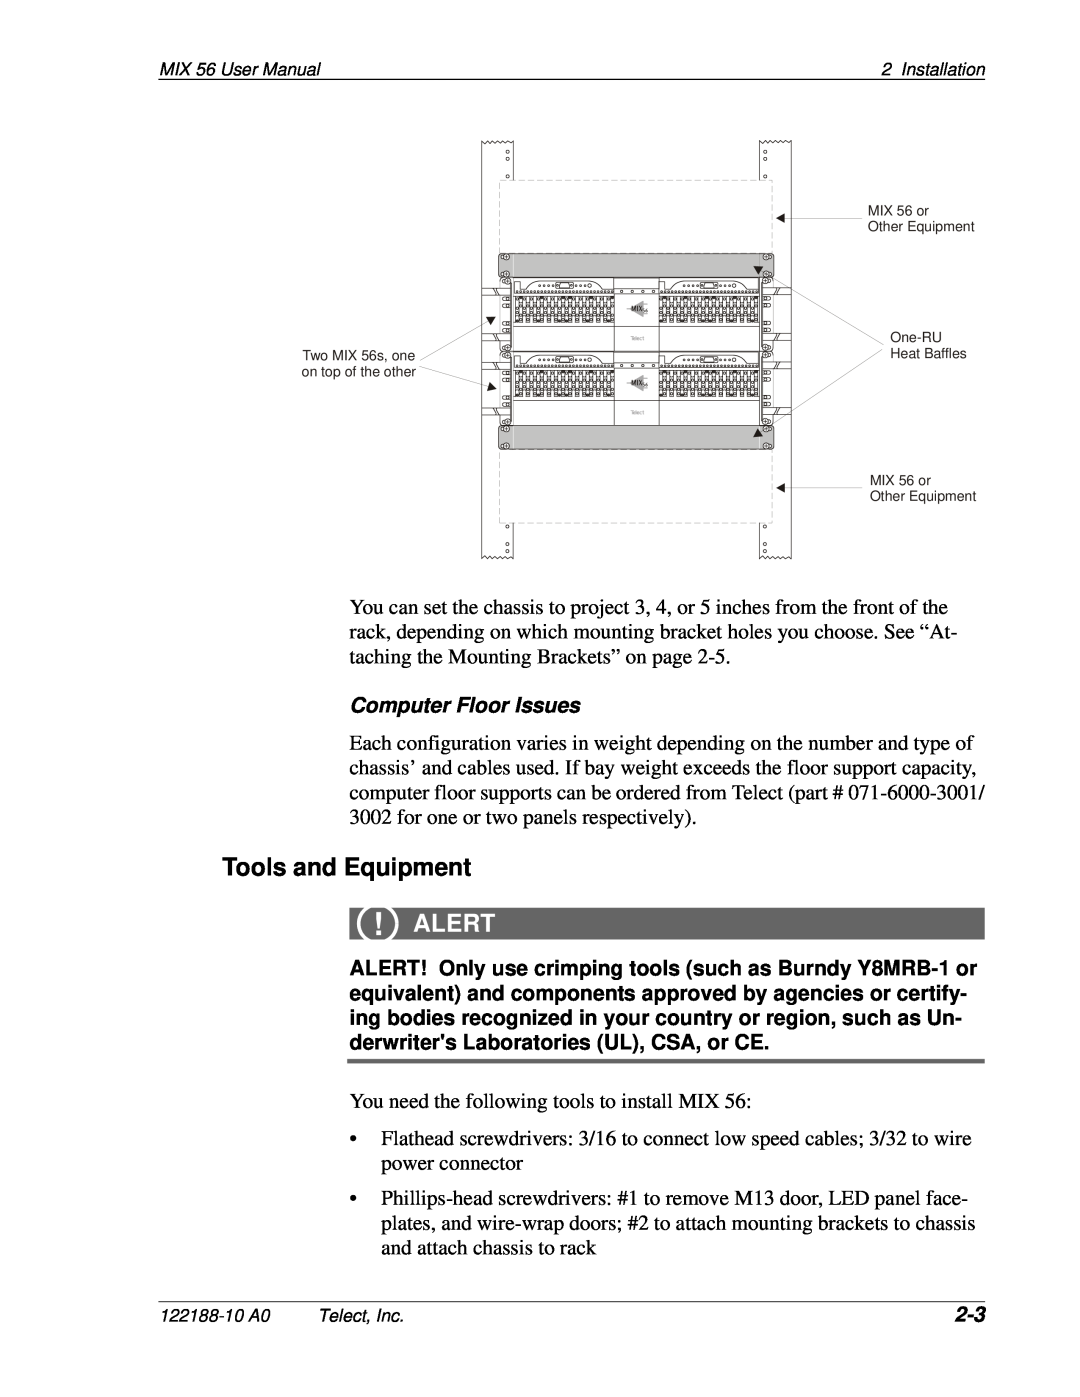 Telect MIX 56 user manual Tools and Equipment, Computer Floor Issues, Alert 